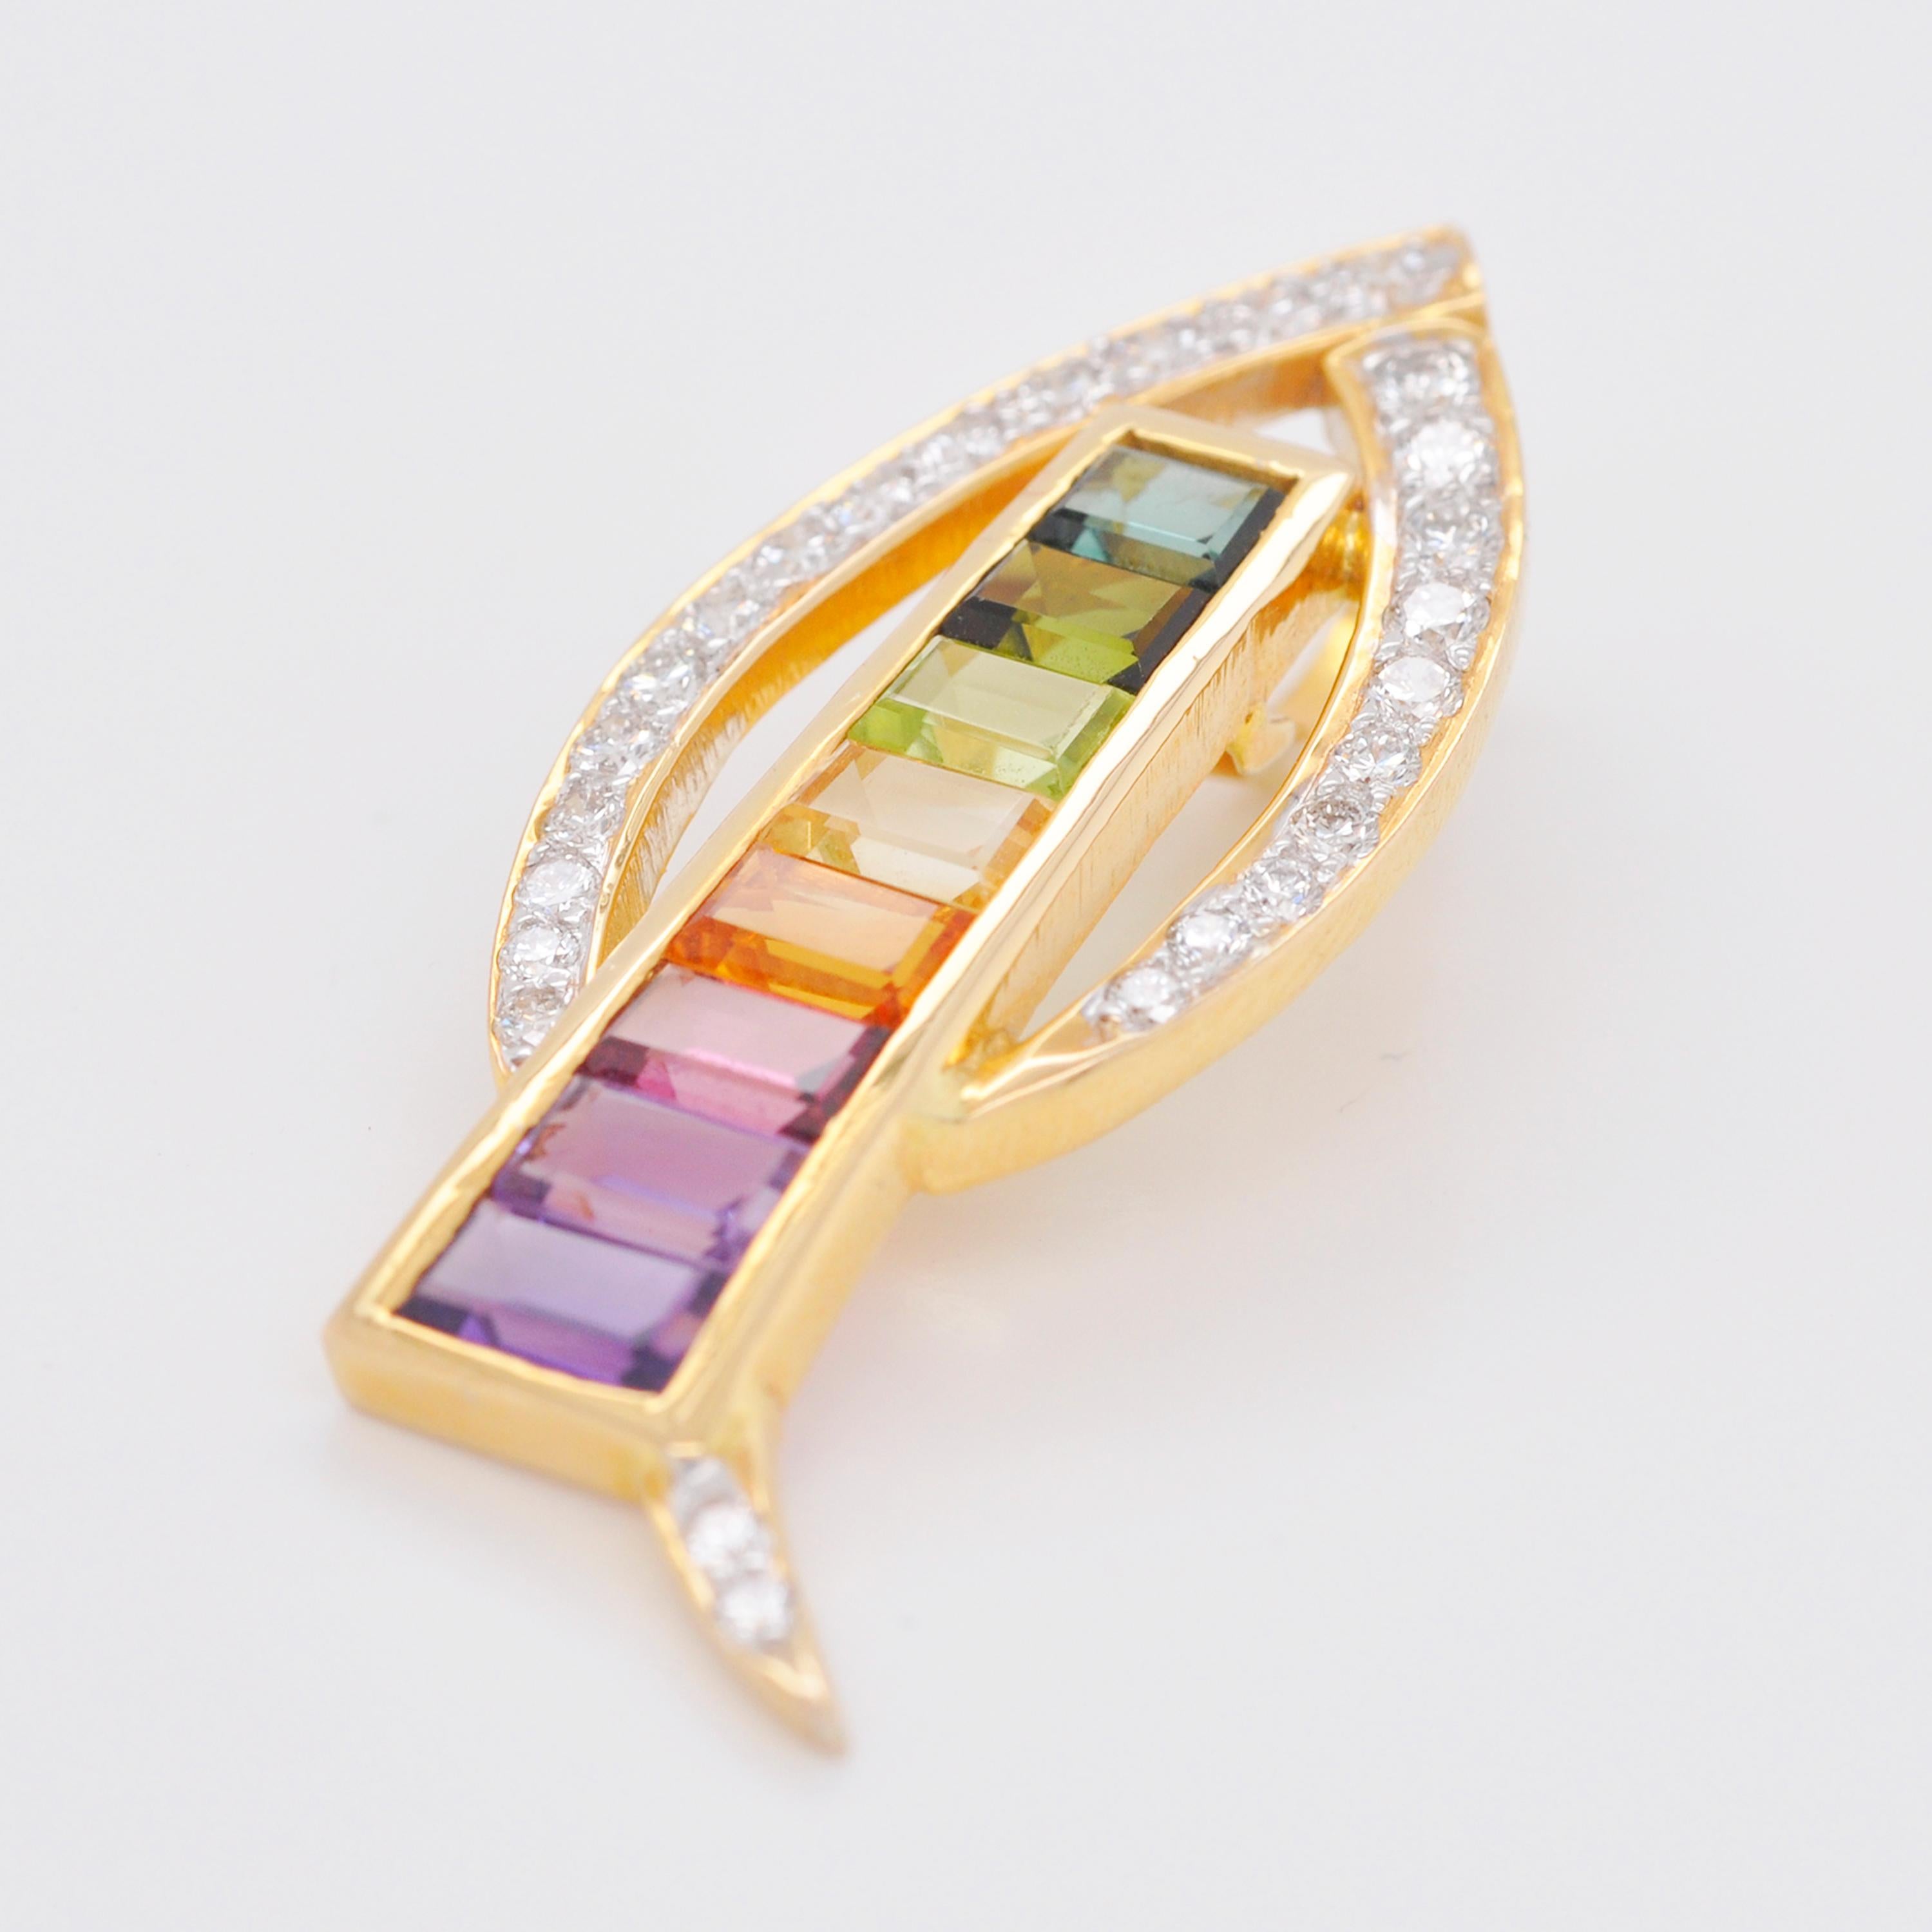 Contemporain Collier pendentif contemporain en or 18 carats avec diamants et pierres précieuses multicolores en forme d'arc-en-ciel en vente